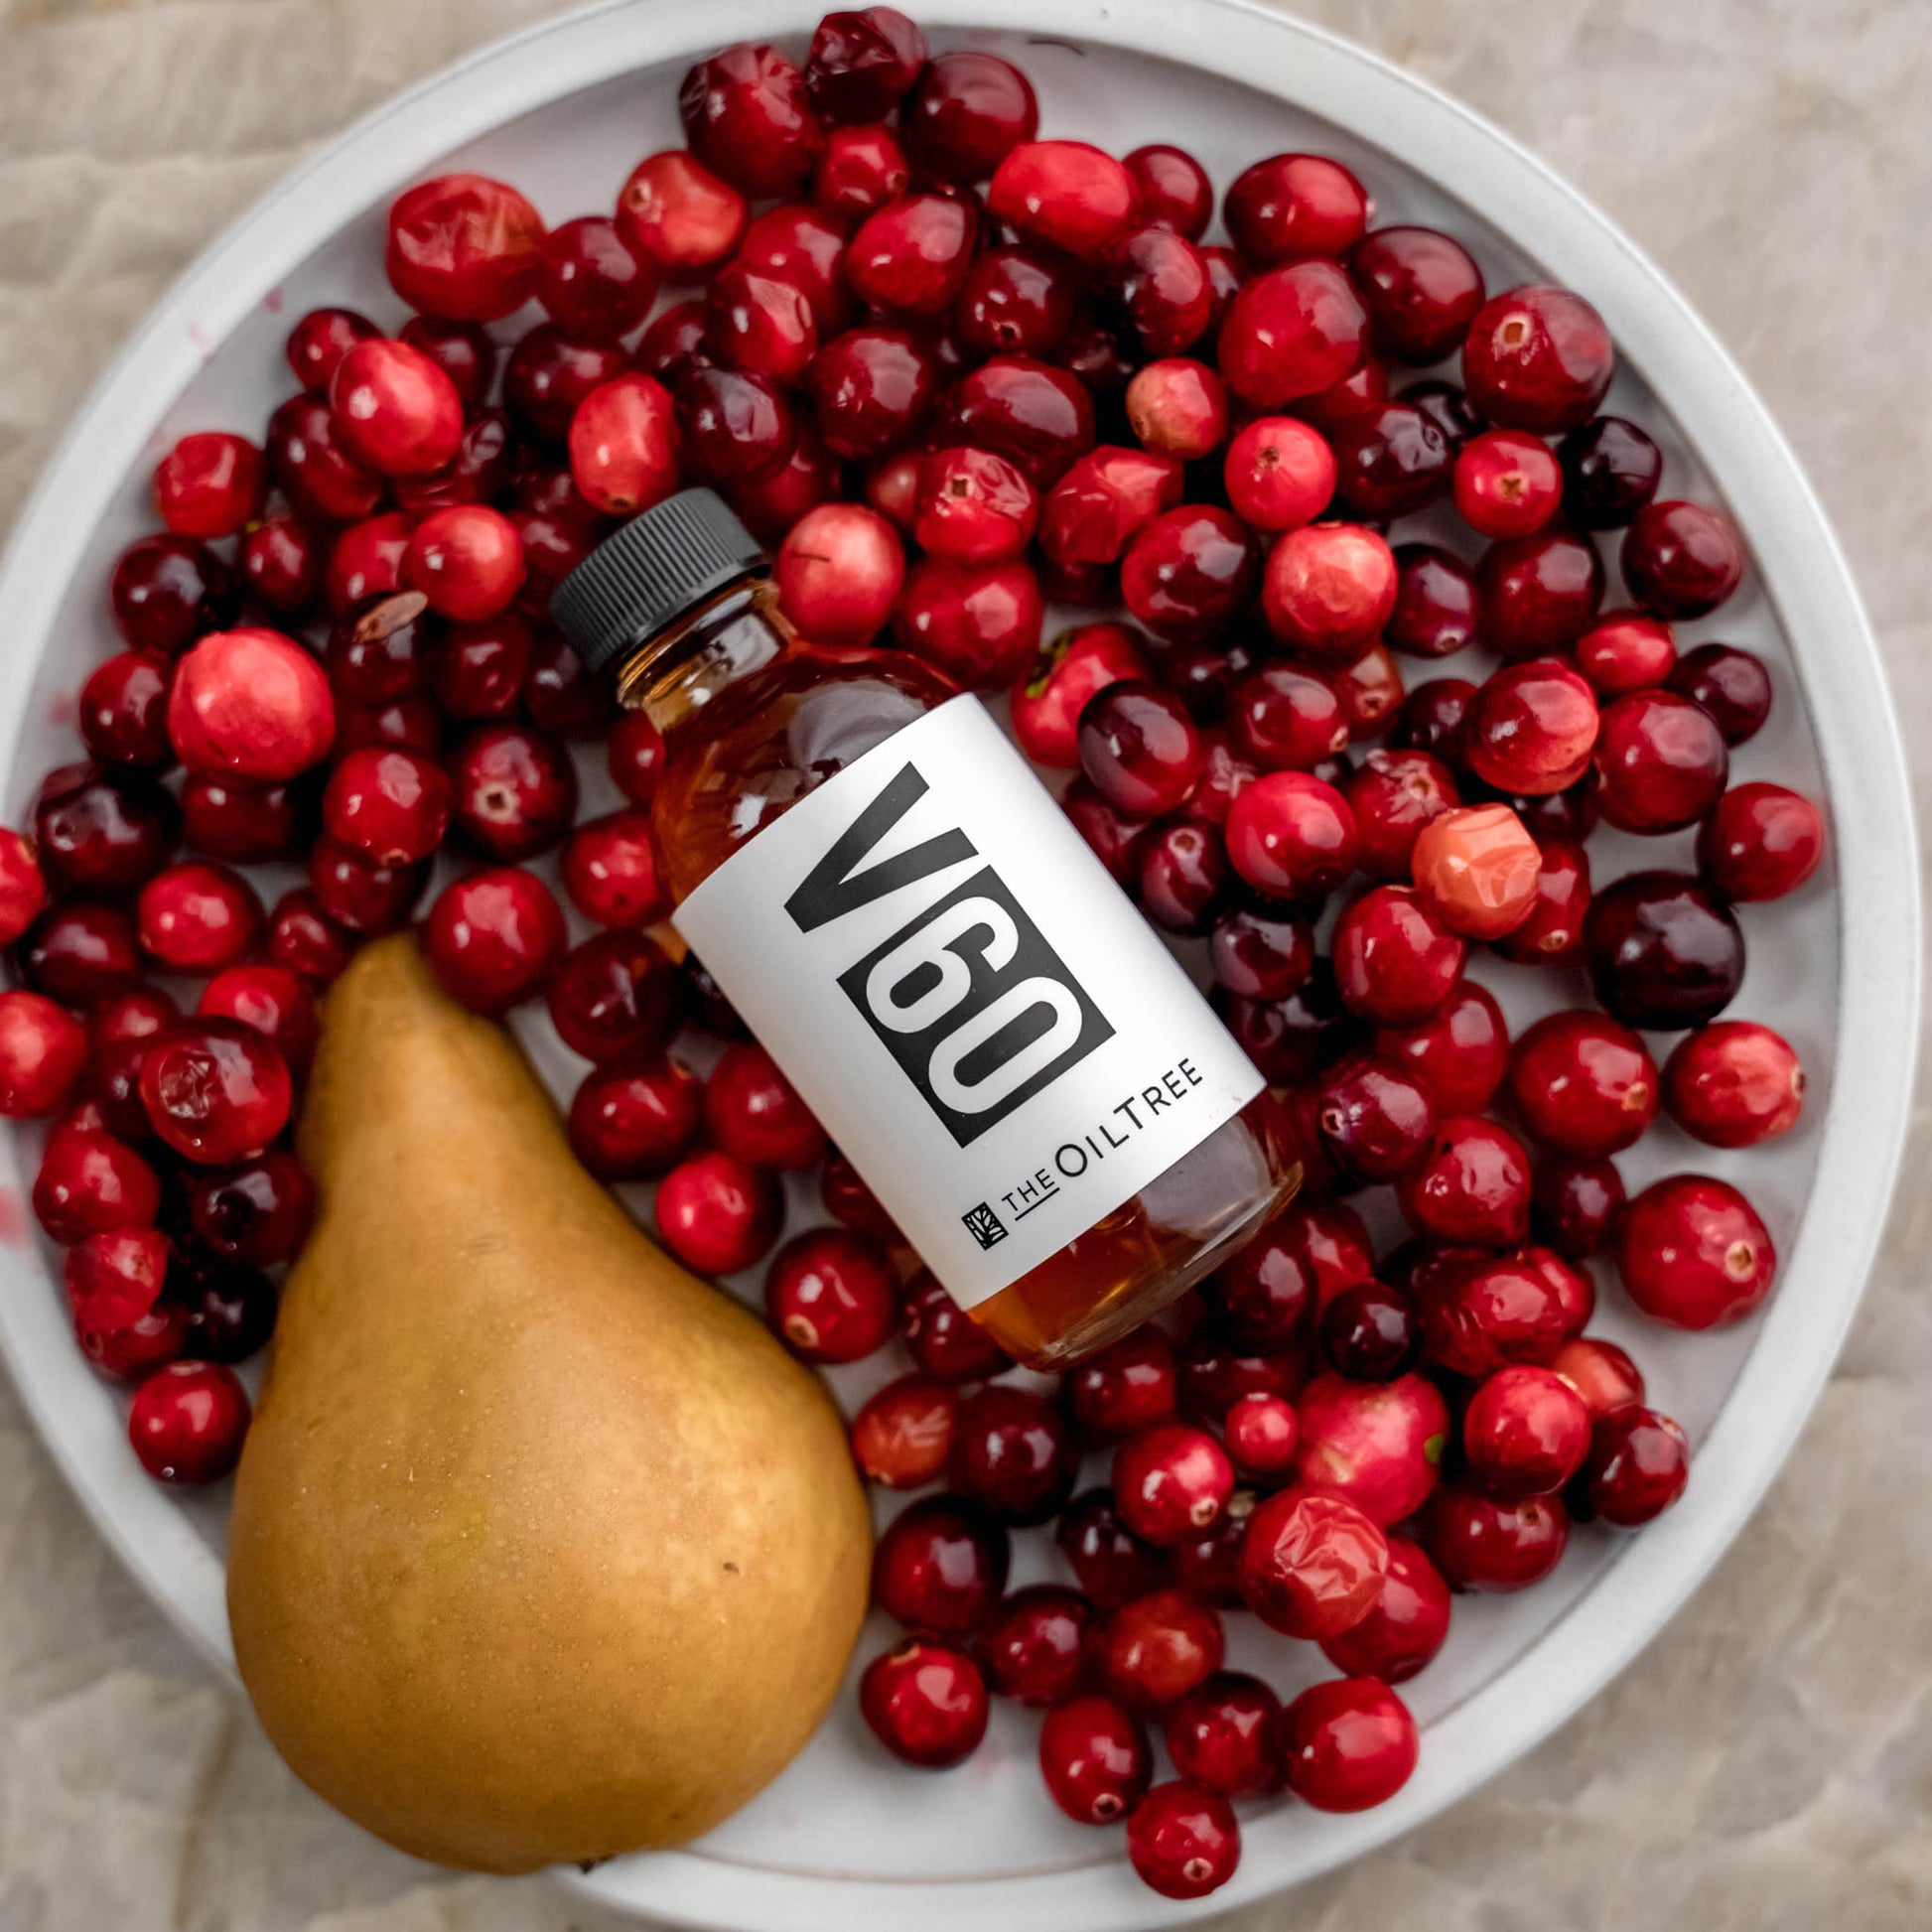 Cranberry Pear Aged White Balsamic Vinegar